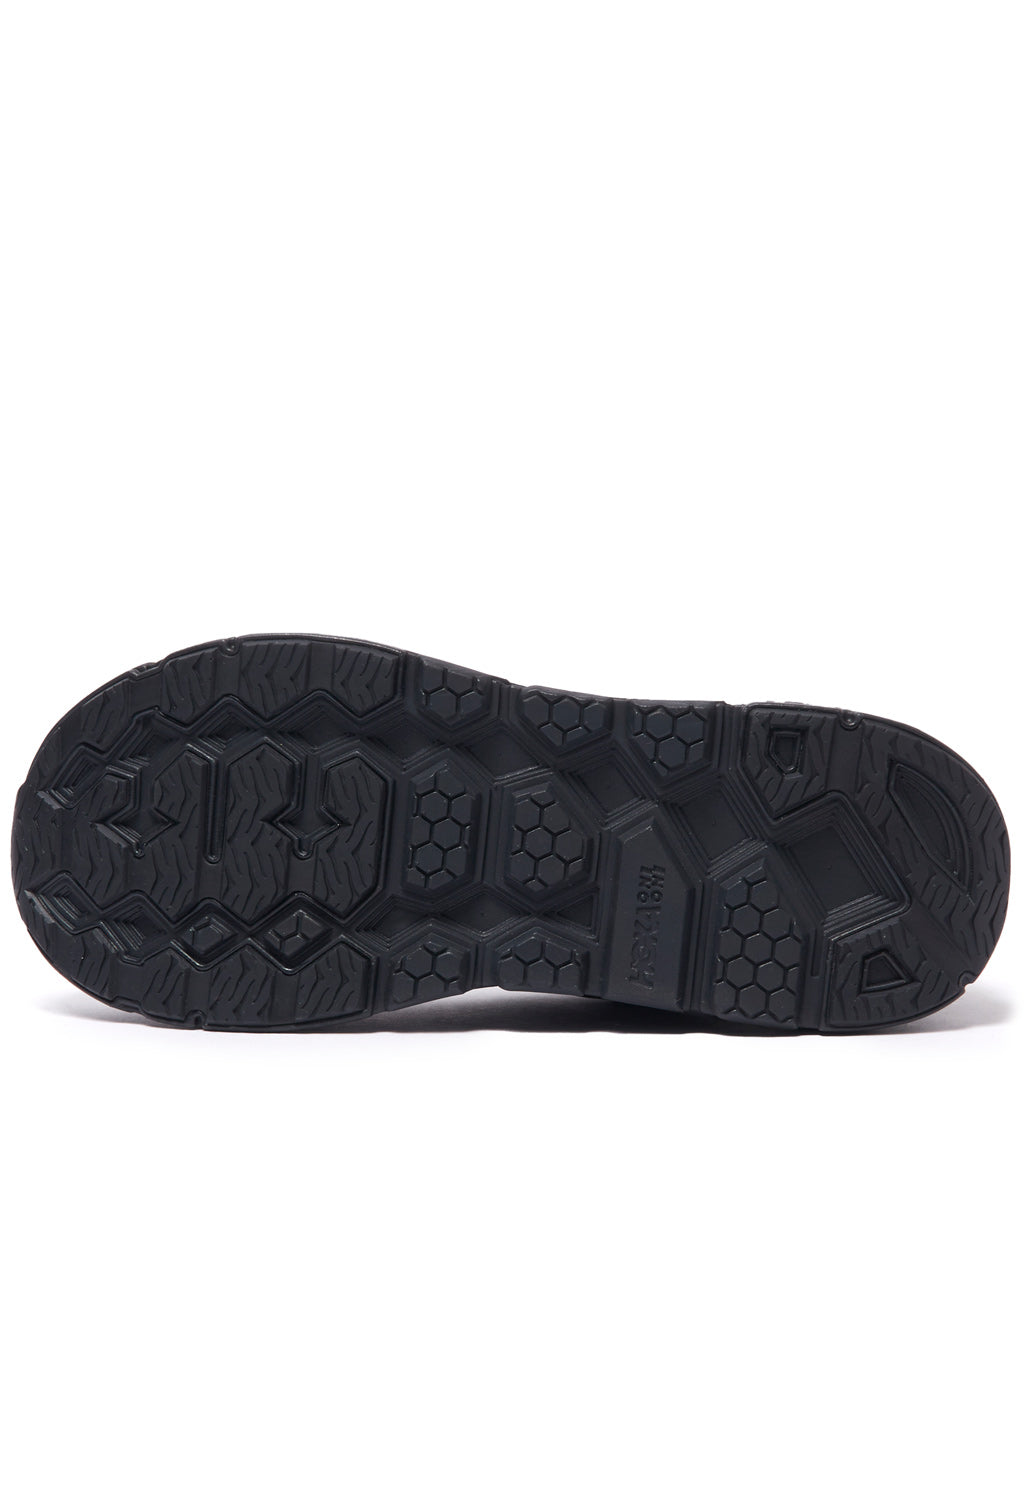 Hoka Clifton L GORE-TEX Shoes - Black/Black